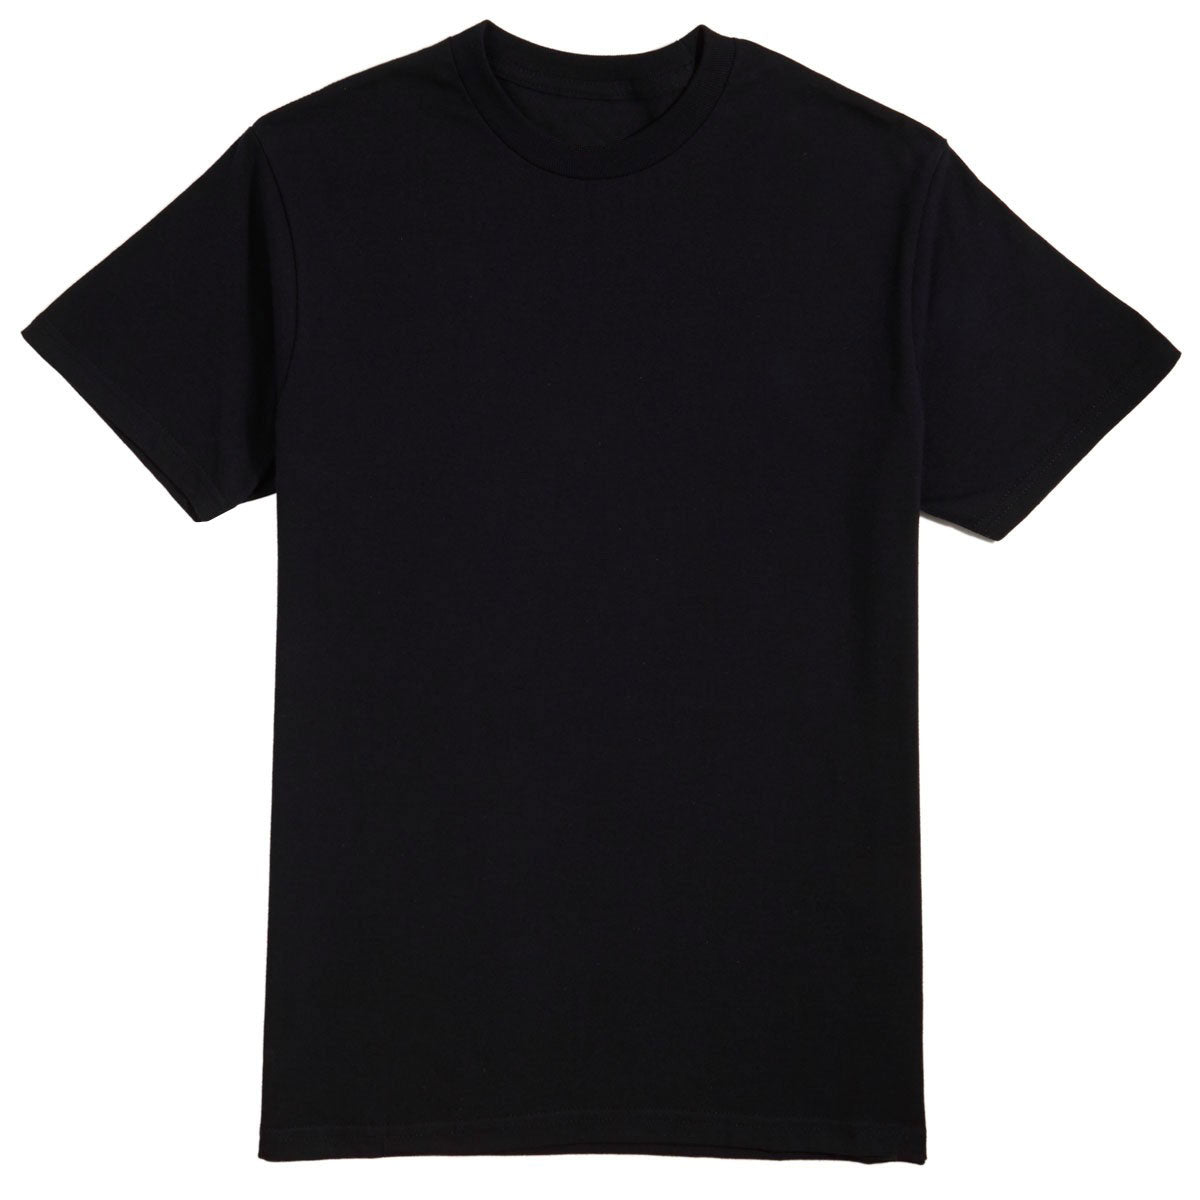 Converse Flash Sheet T-Shirt - Black - XXL image 1